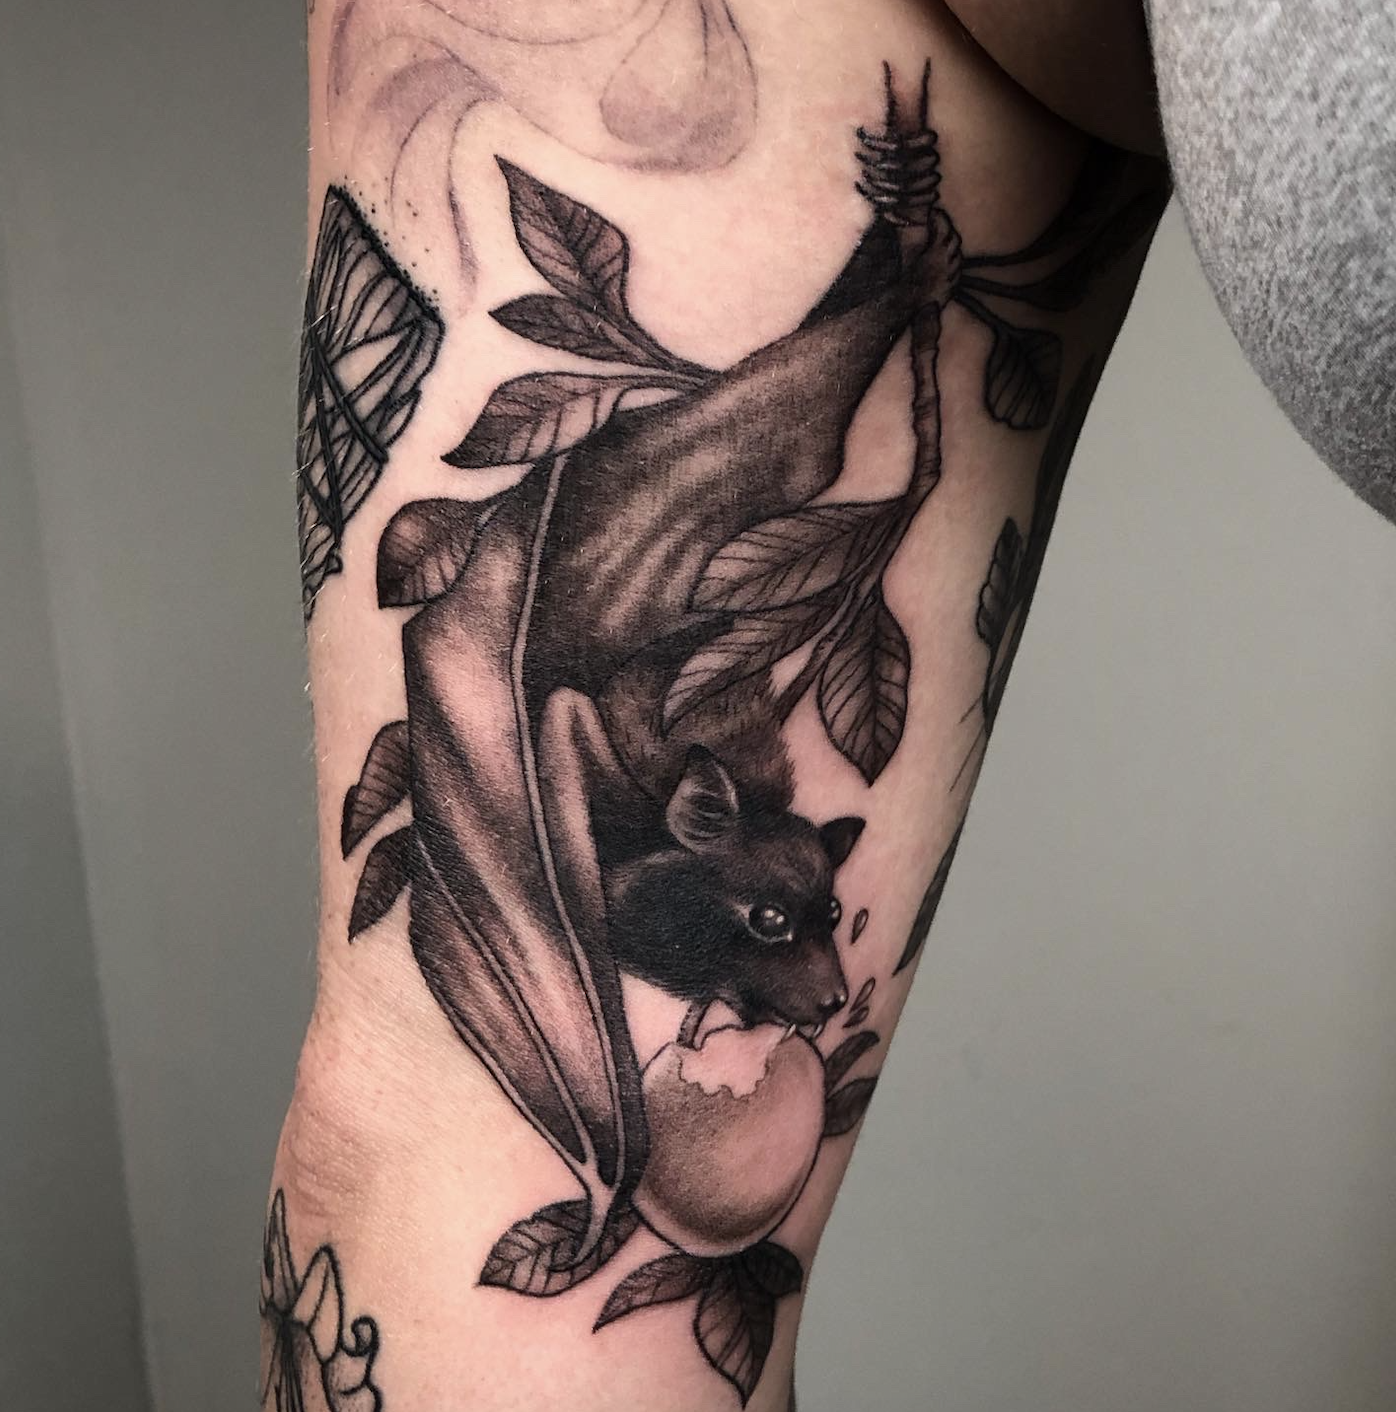 fruit bat tattoo.png